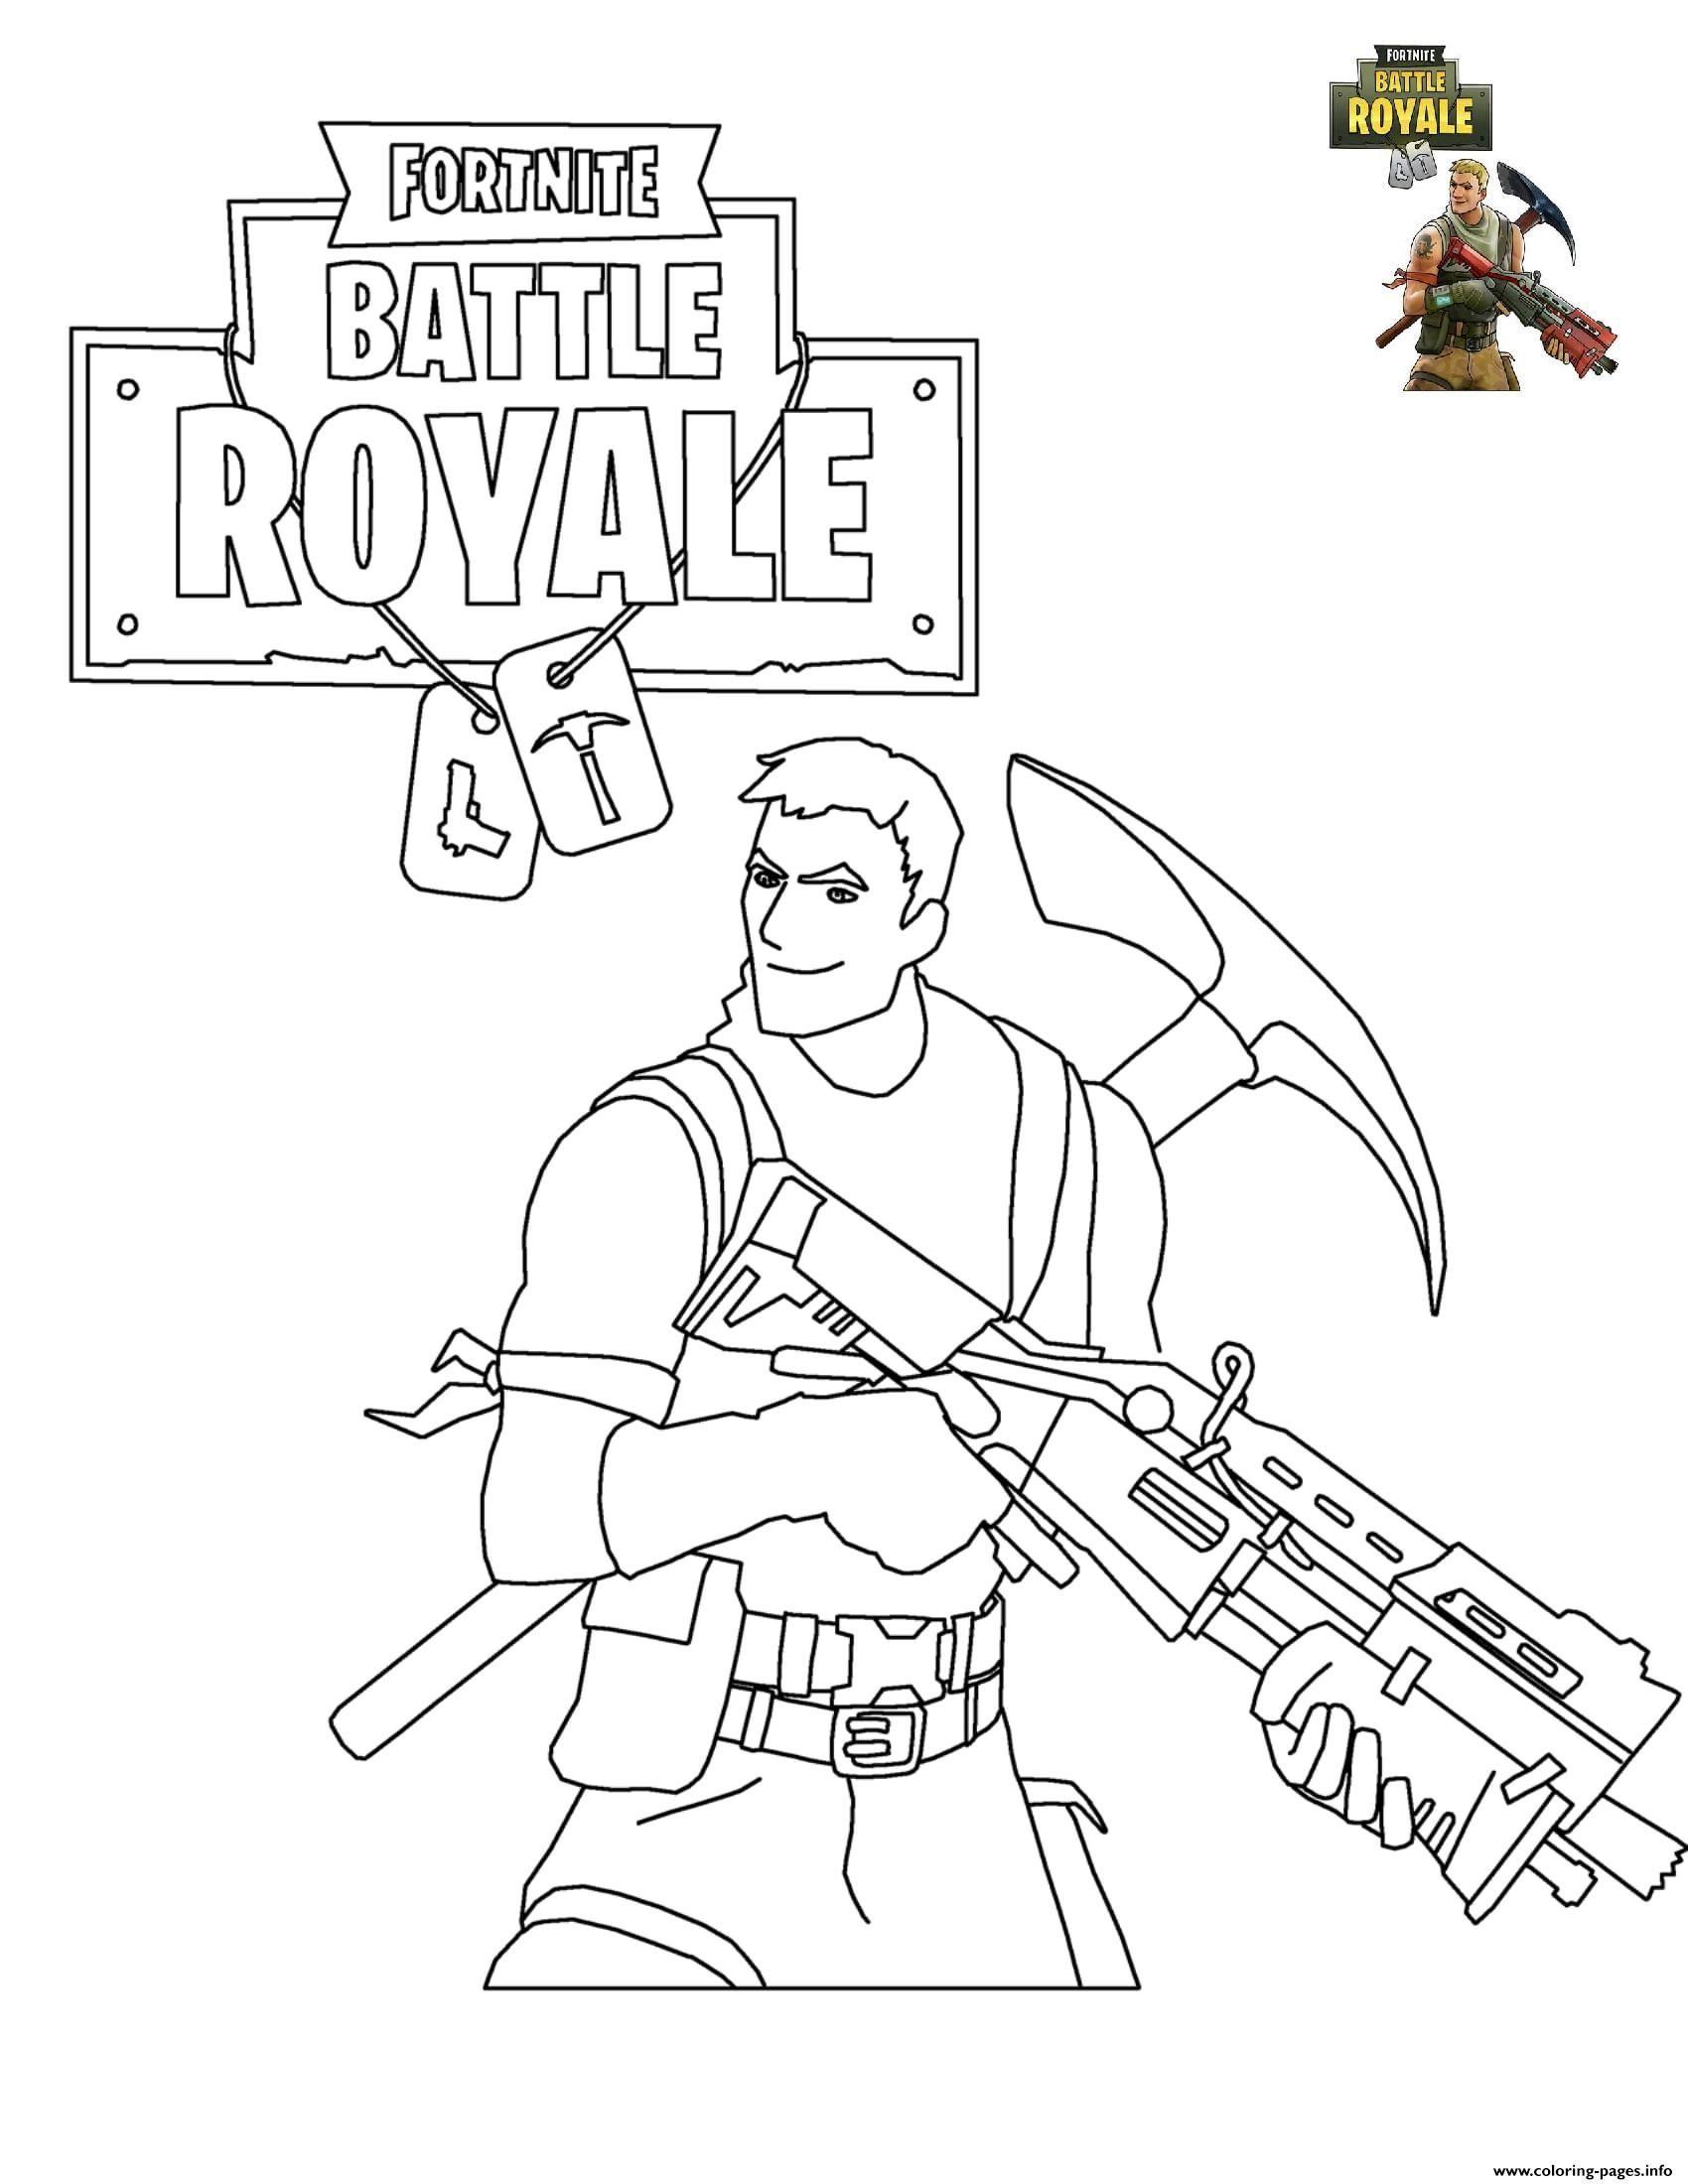 Coloring Fortnite Battle Royale Logo - Fortnite Battle Royale coloring pages. Fortnite Party